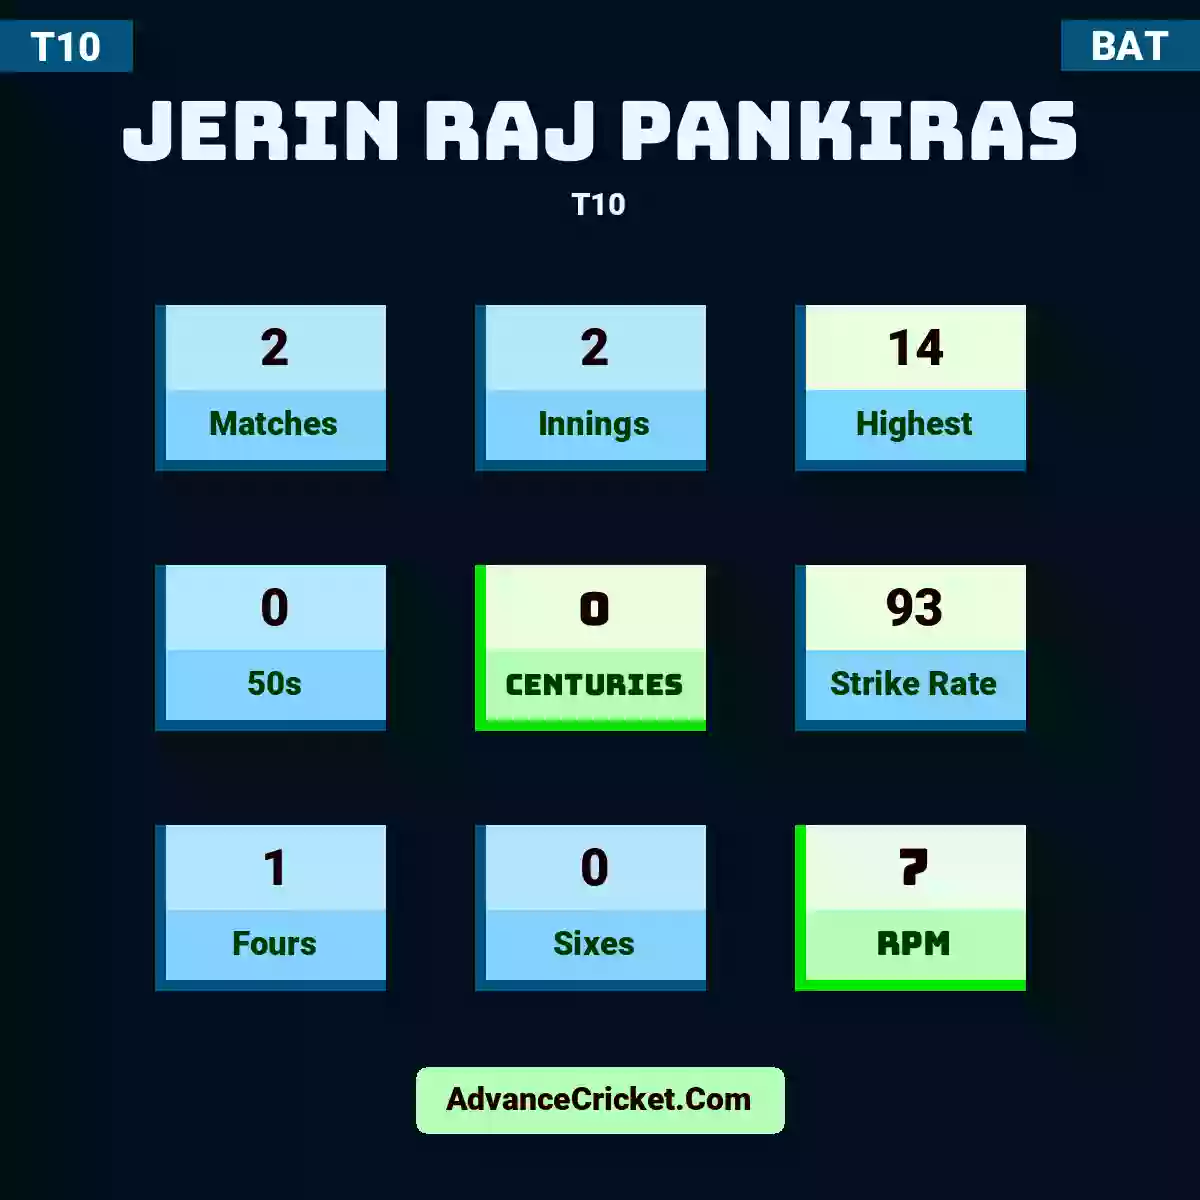 Jerin Raj Pankiras T10 , Jerin Raj Pankiras played 2 matches, scored 14 runs as highest, 0 half-centuries, and 0 centuries, with a strike rate of 93. j.raj.pankiras hit 1 fours and 0 sixes, with an RPM of 7.